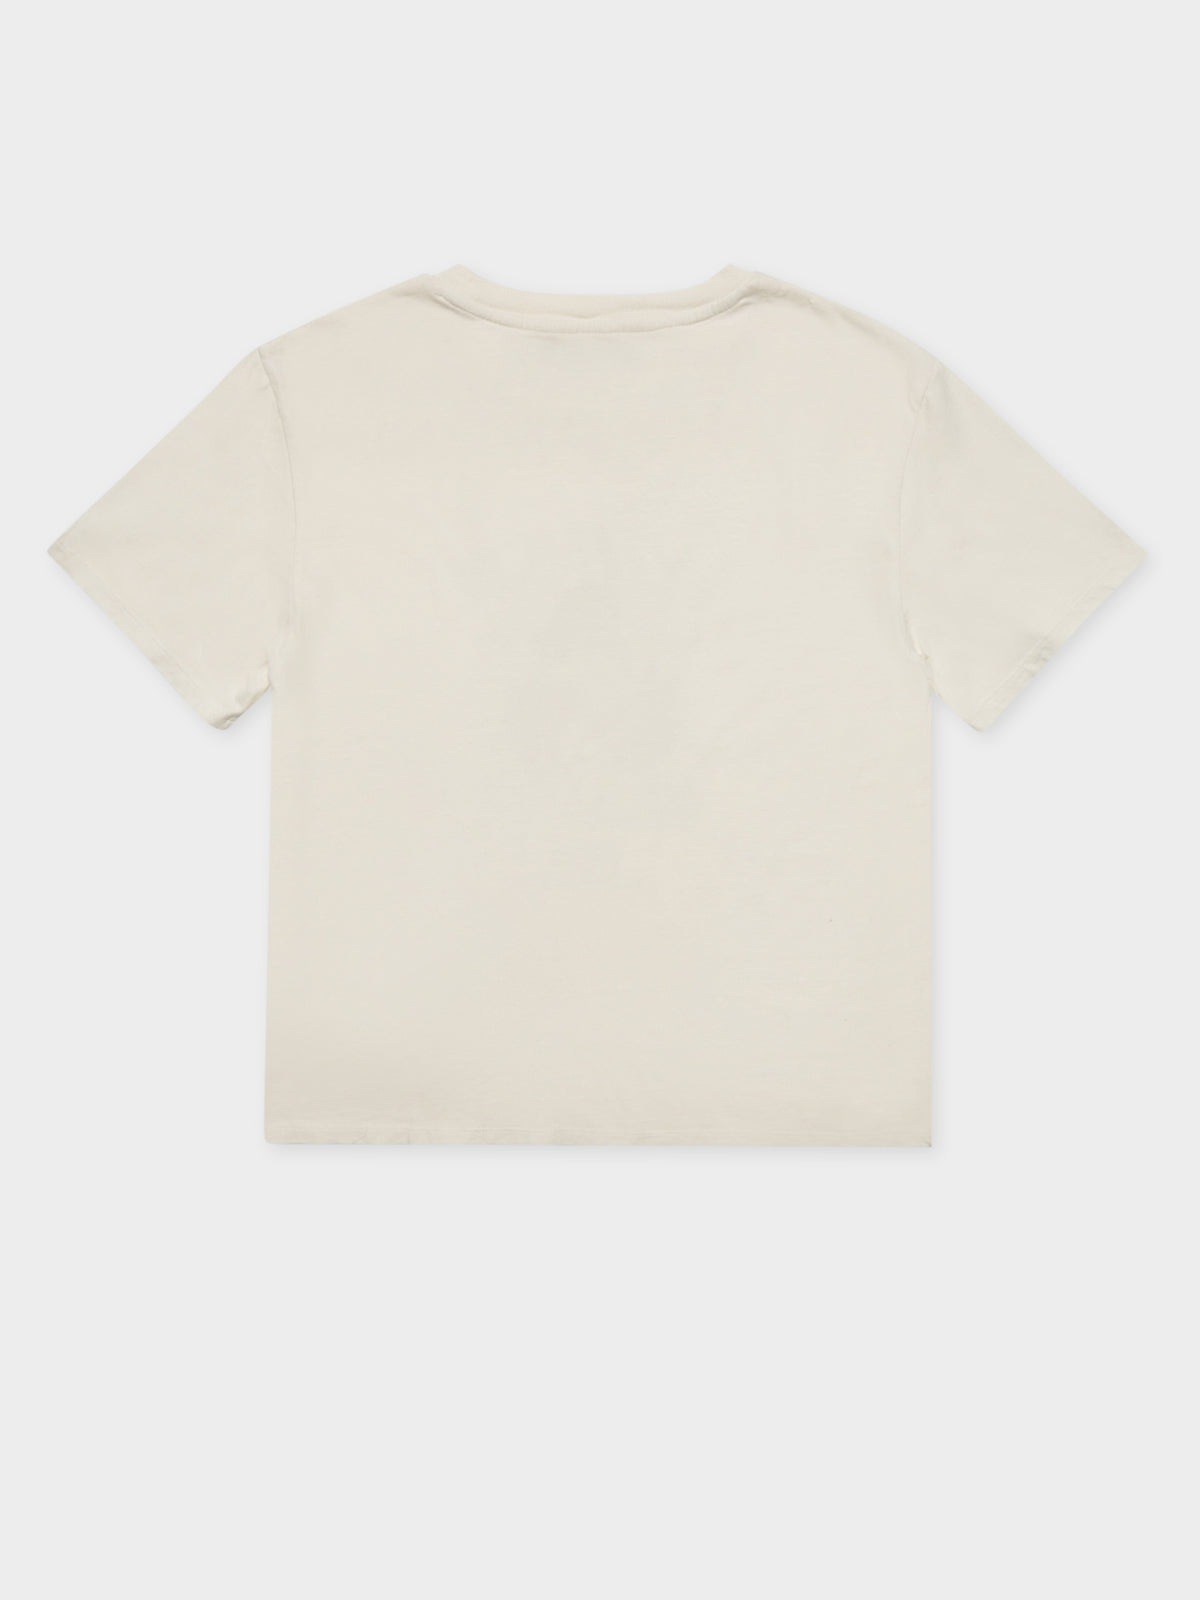 Vintage Rose Short Sleeve T-Shirt in Cream